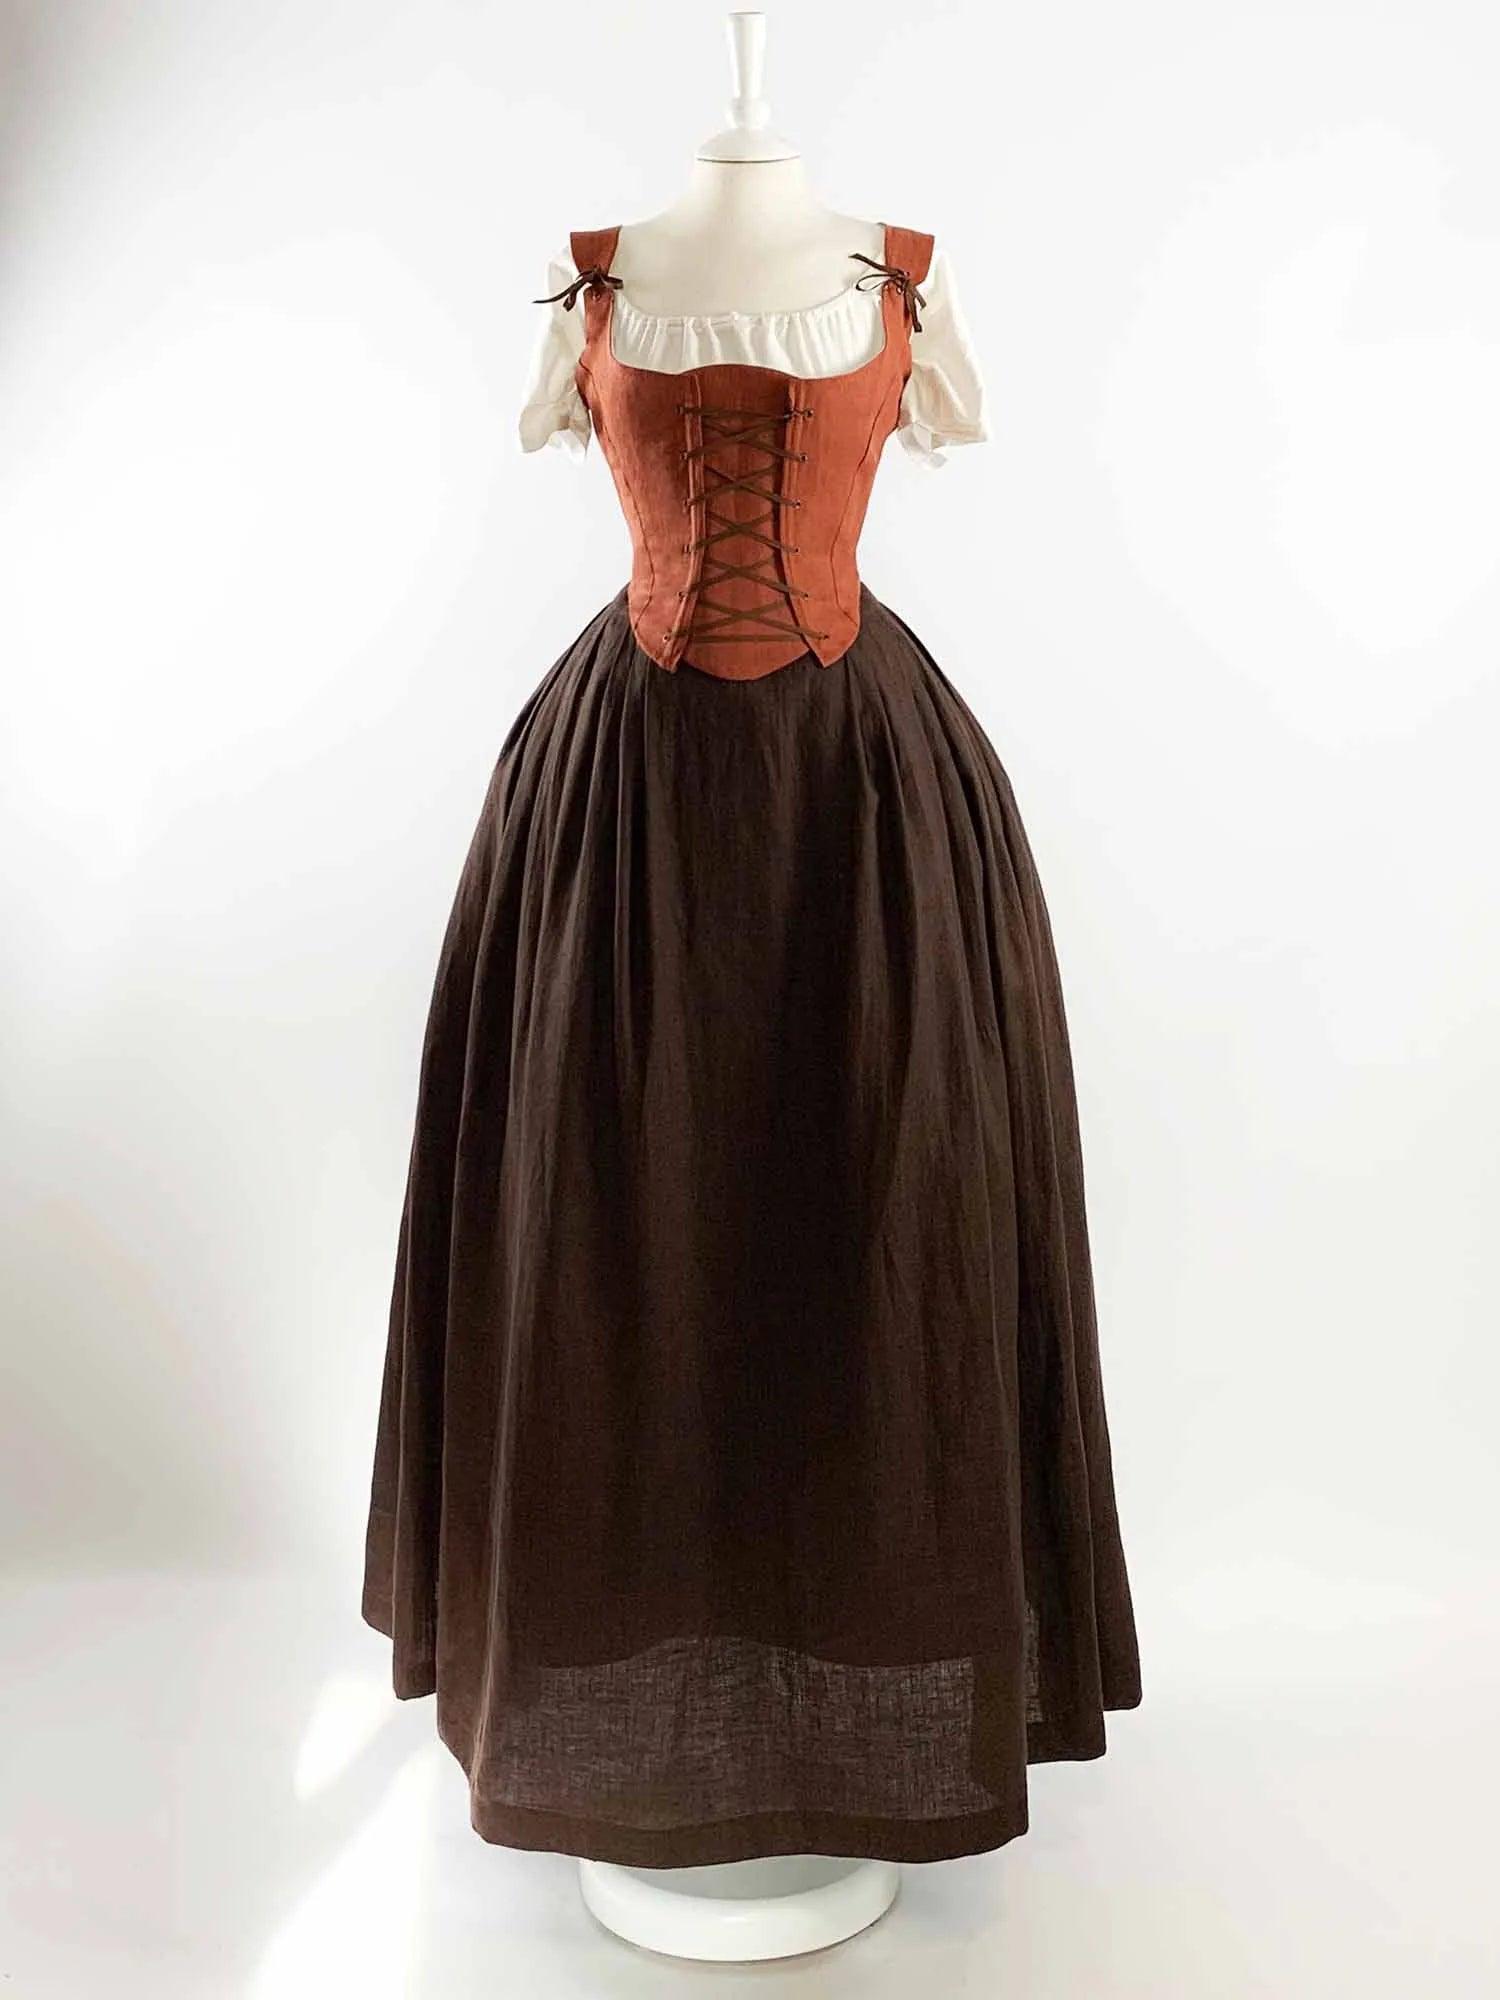 ISOLDE, Renaissance Costume in Rust Orange & Chocolate Linen - Atelier Serraspina - Costume renaissance en Lin Terre de Sienne et Chocolat